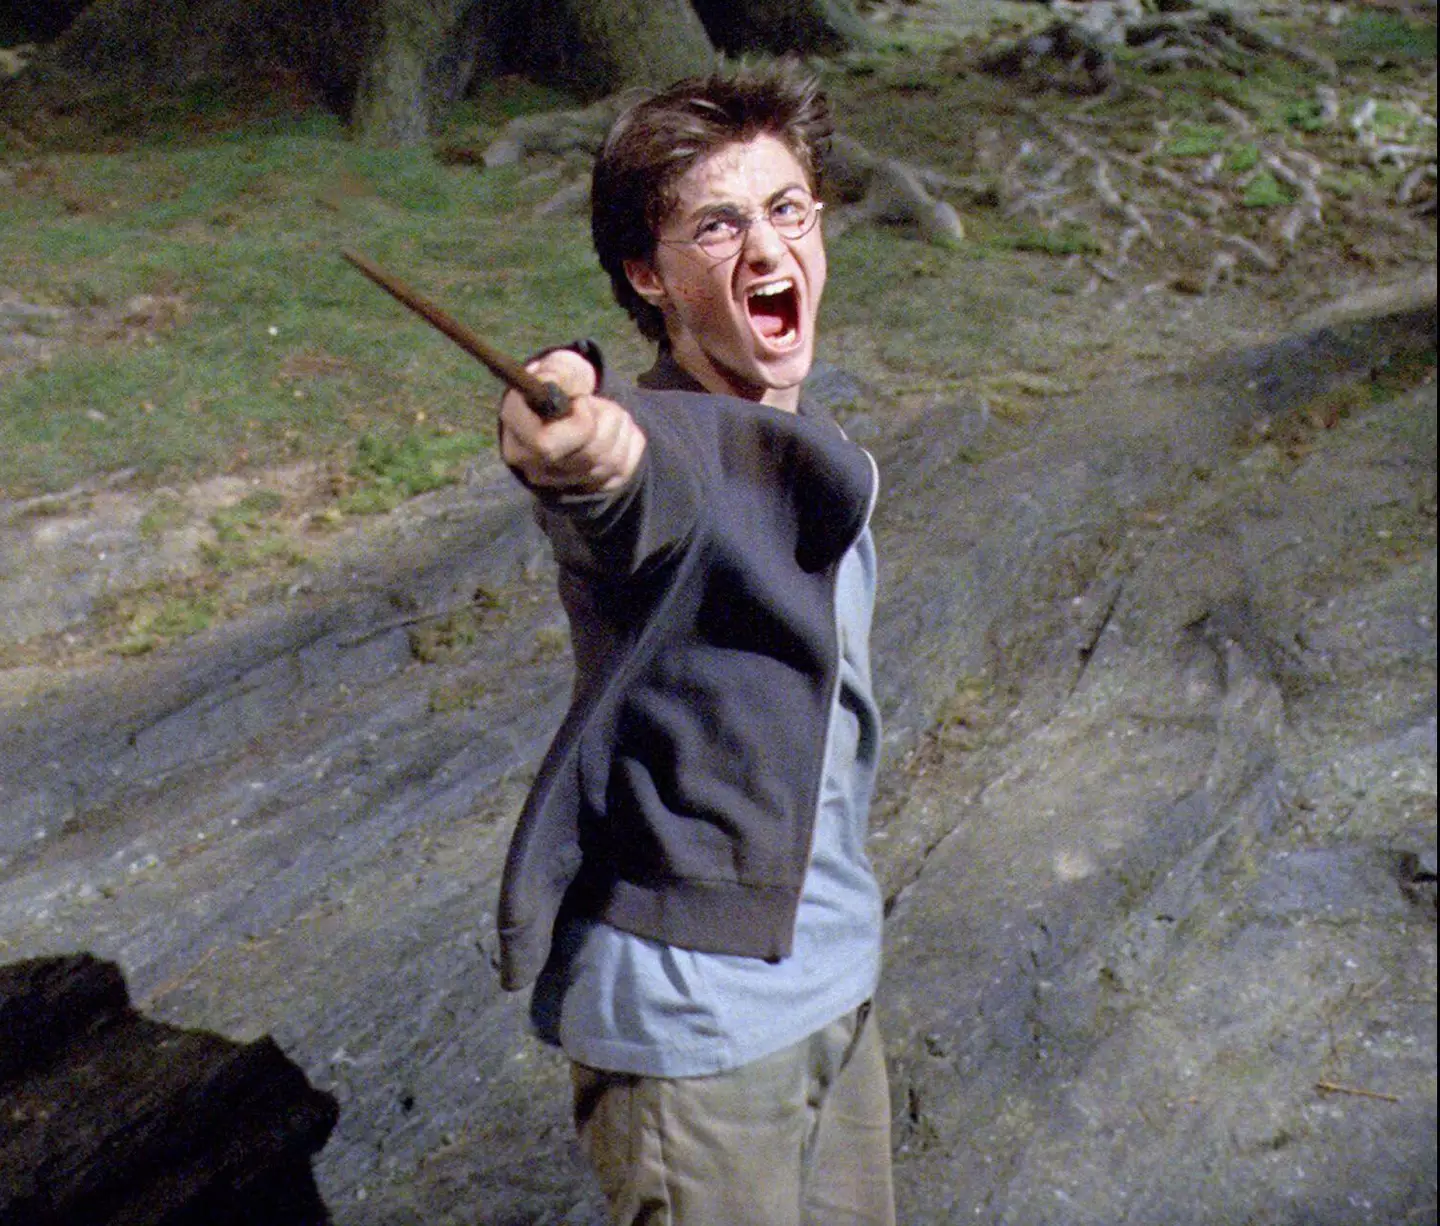 Daniel Radcliffe in Harry Potter and the Prisoner of Azkaban, 2004.